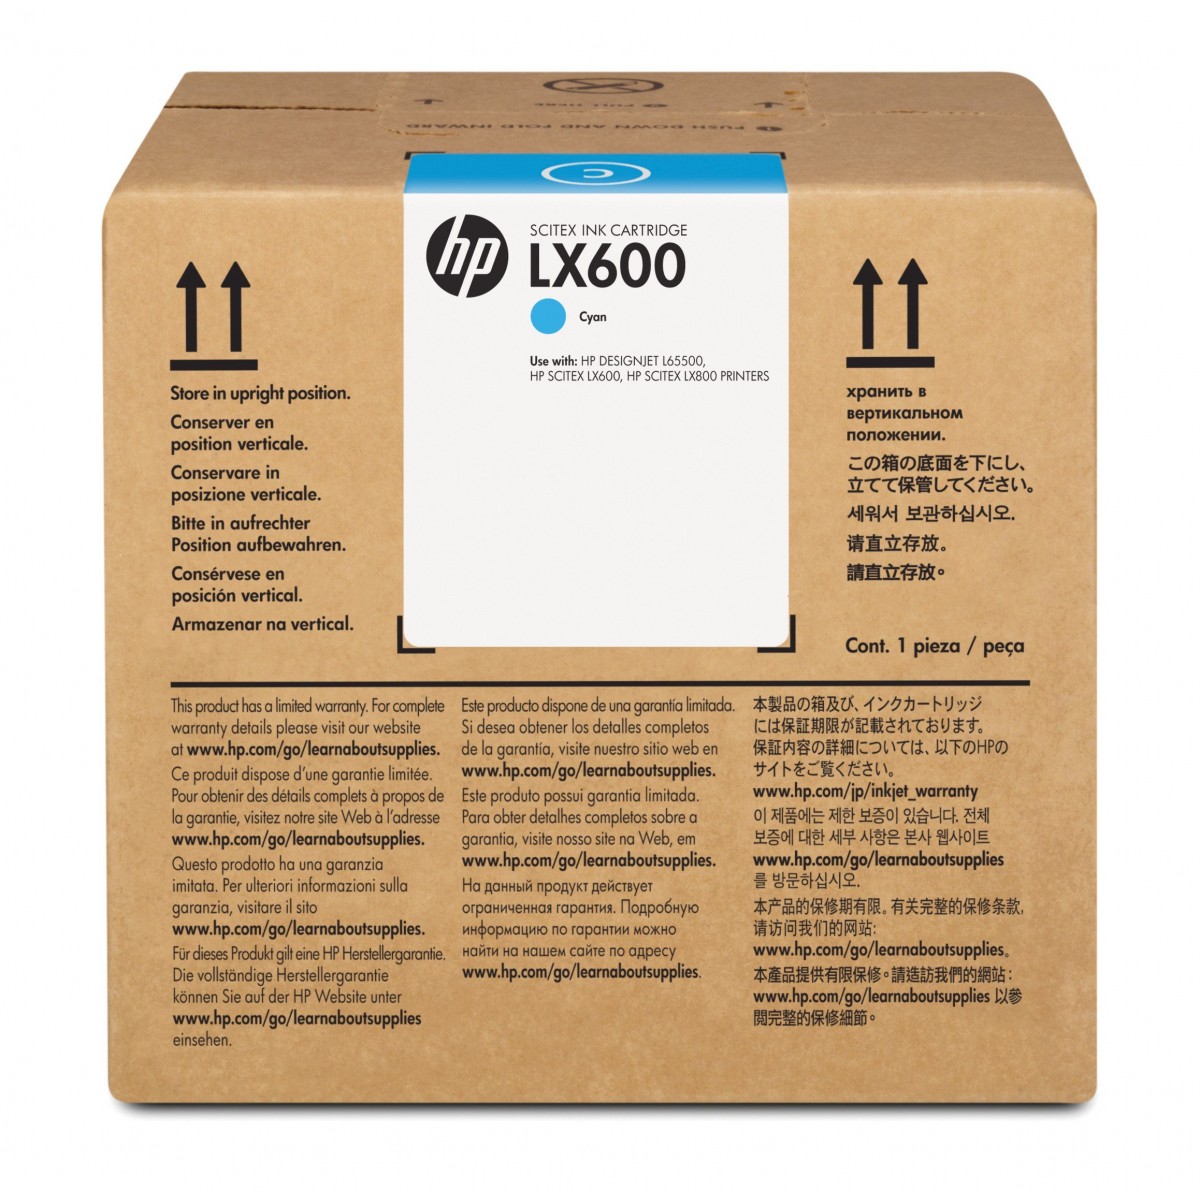 HP LX600 - Original - Pigment-based ink - Cyan - HP - HP Scitex LX600 Printer - HP Scitex LX800 Printer - HP Designjet L65500 Pr